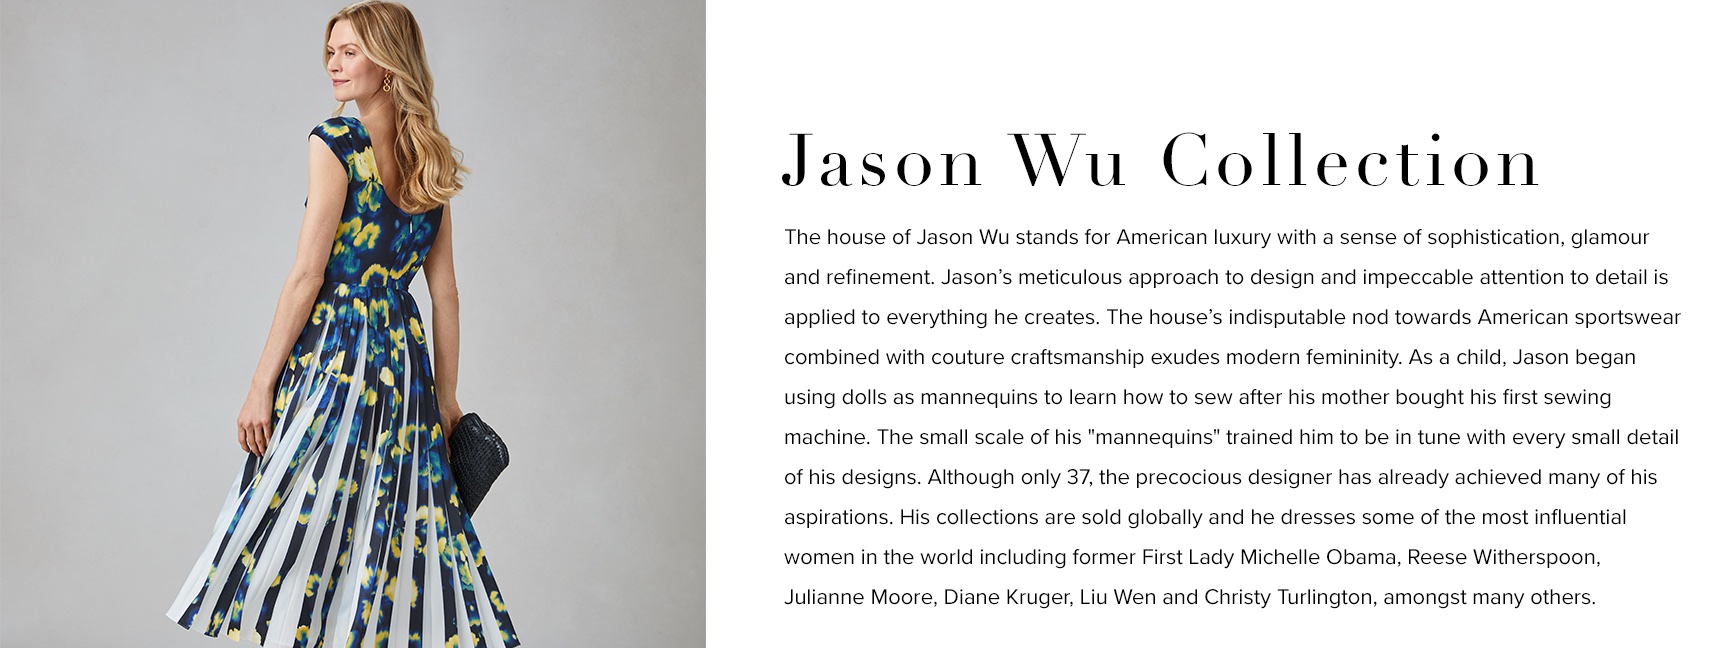 Jason Wu Collection